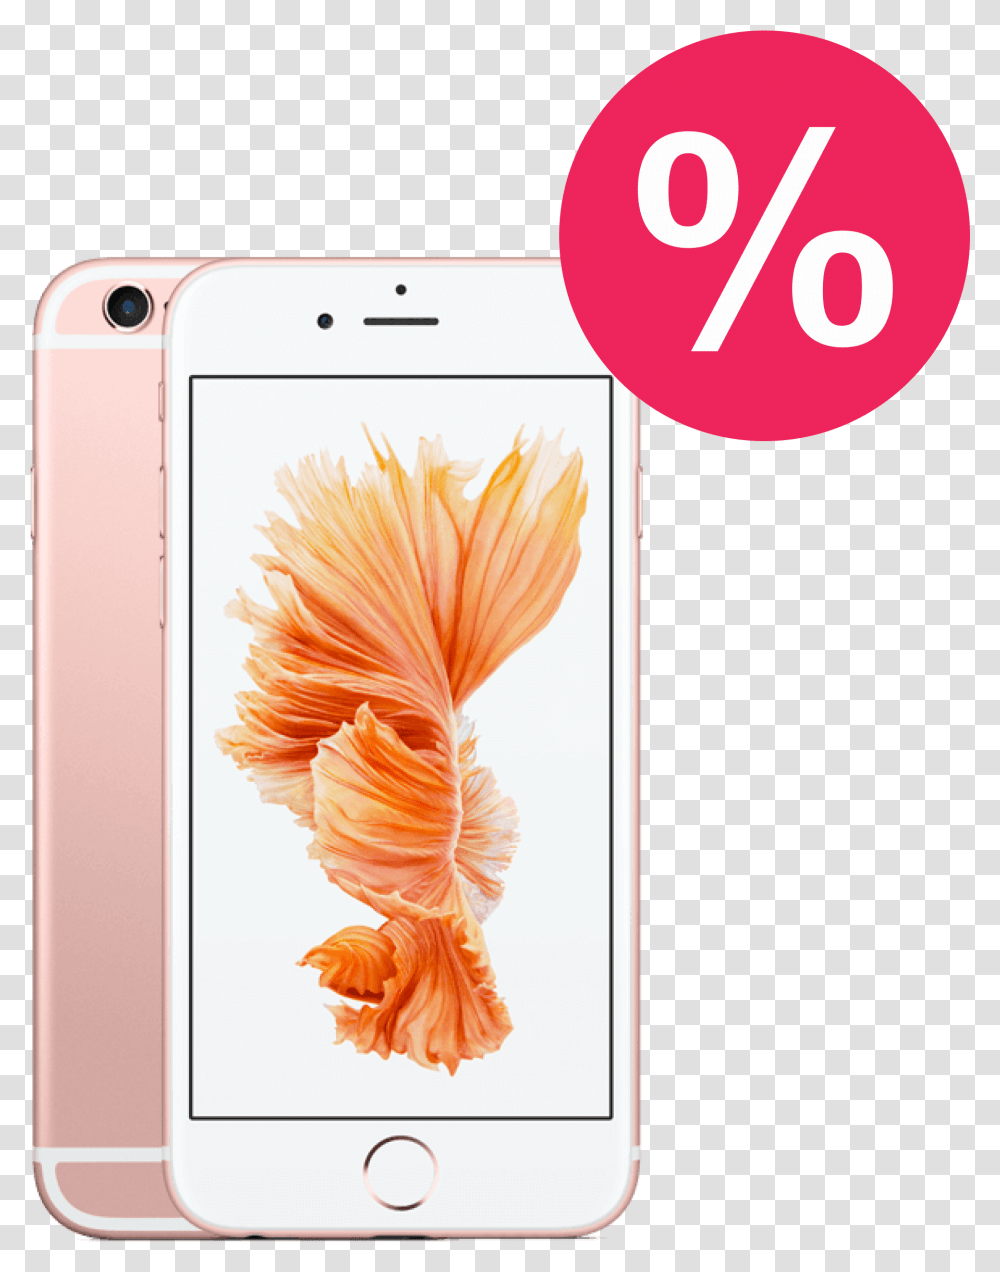 Het begin vrouwelijk Van Iphone 6s Rose Gold Iphone 6s Plus Price In Sri Lanka, Mobile Phone,  Electronics, Cell Phone Transparent Png – Pngset.com